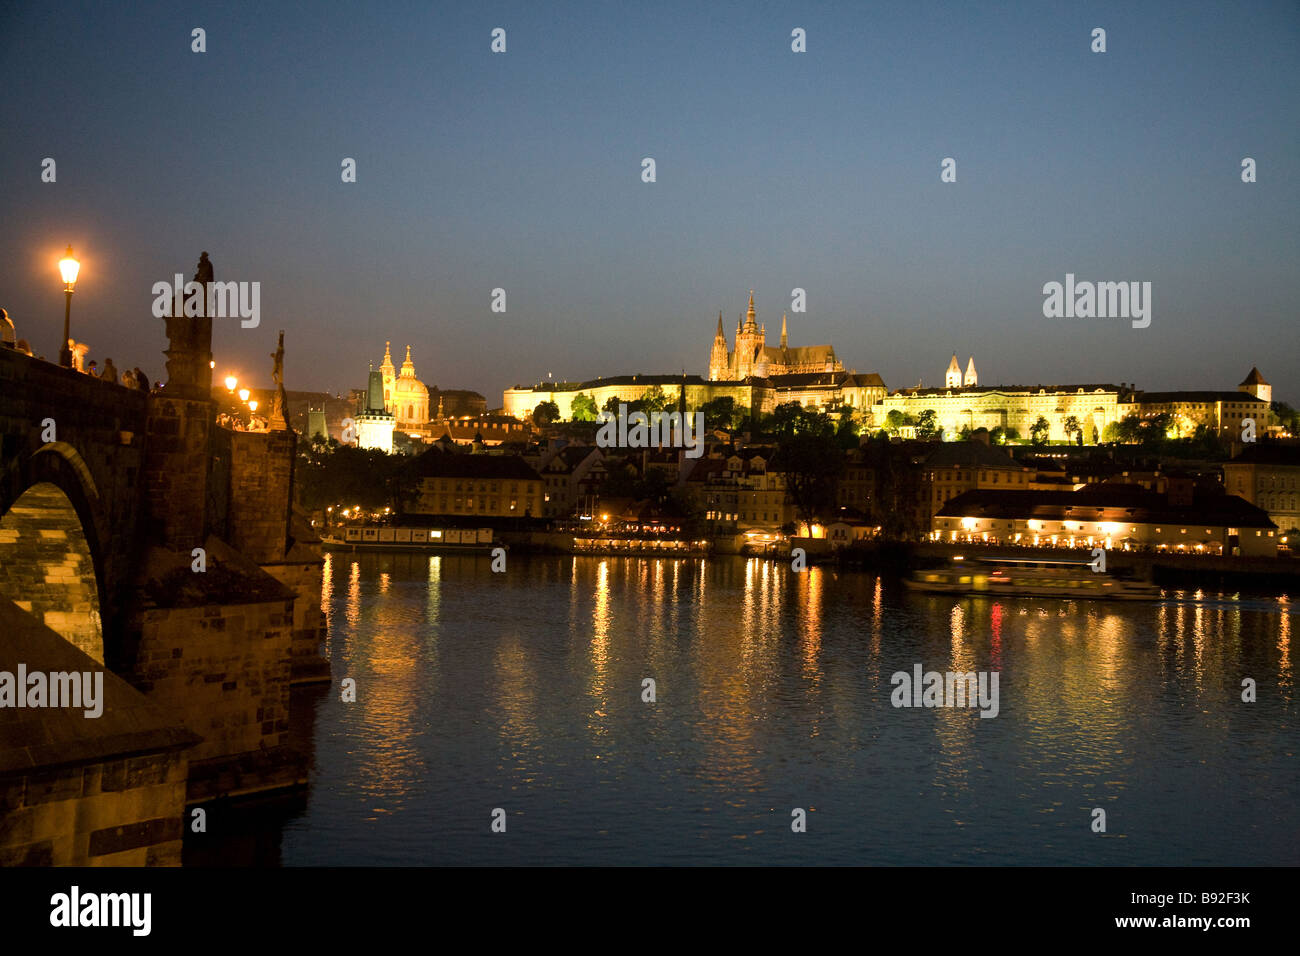 Charles Bridge Karluv most night River Vltava Prague Castle Stock Photo